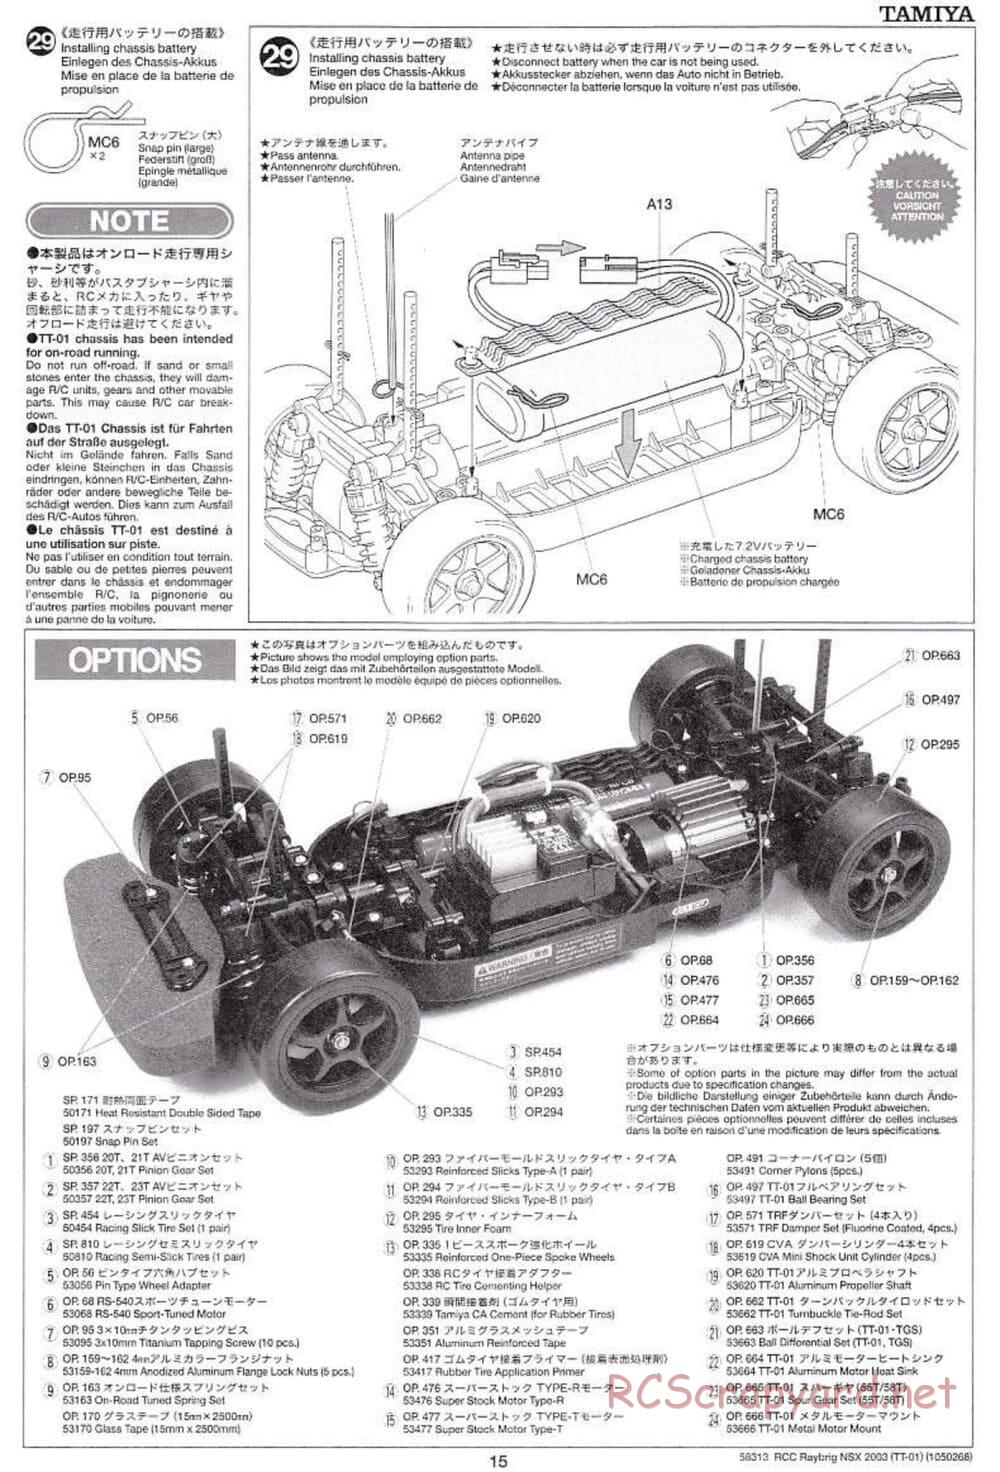 Tamiya - Raybrig NSX 2003 - TT-01 Chassis - Manual - Page 15